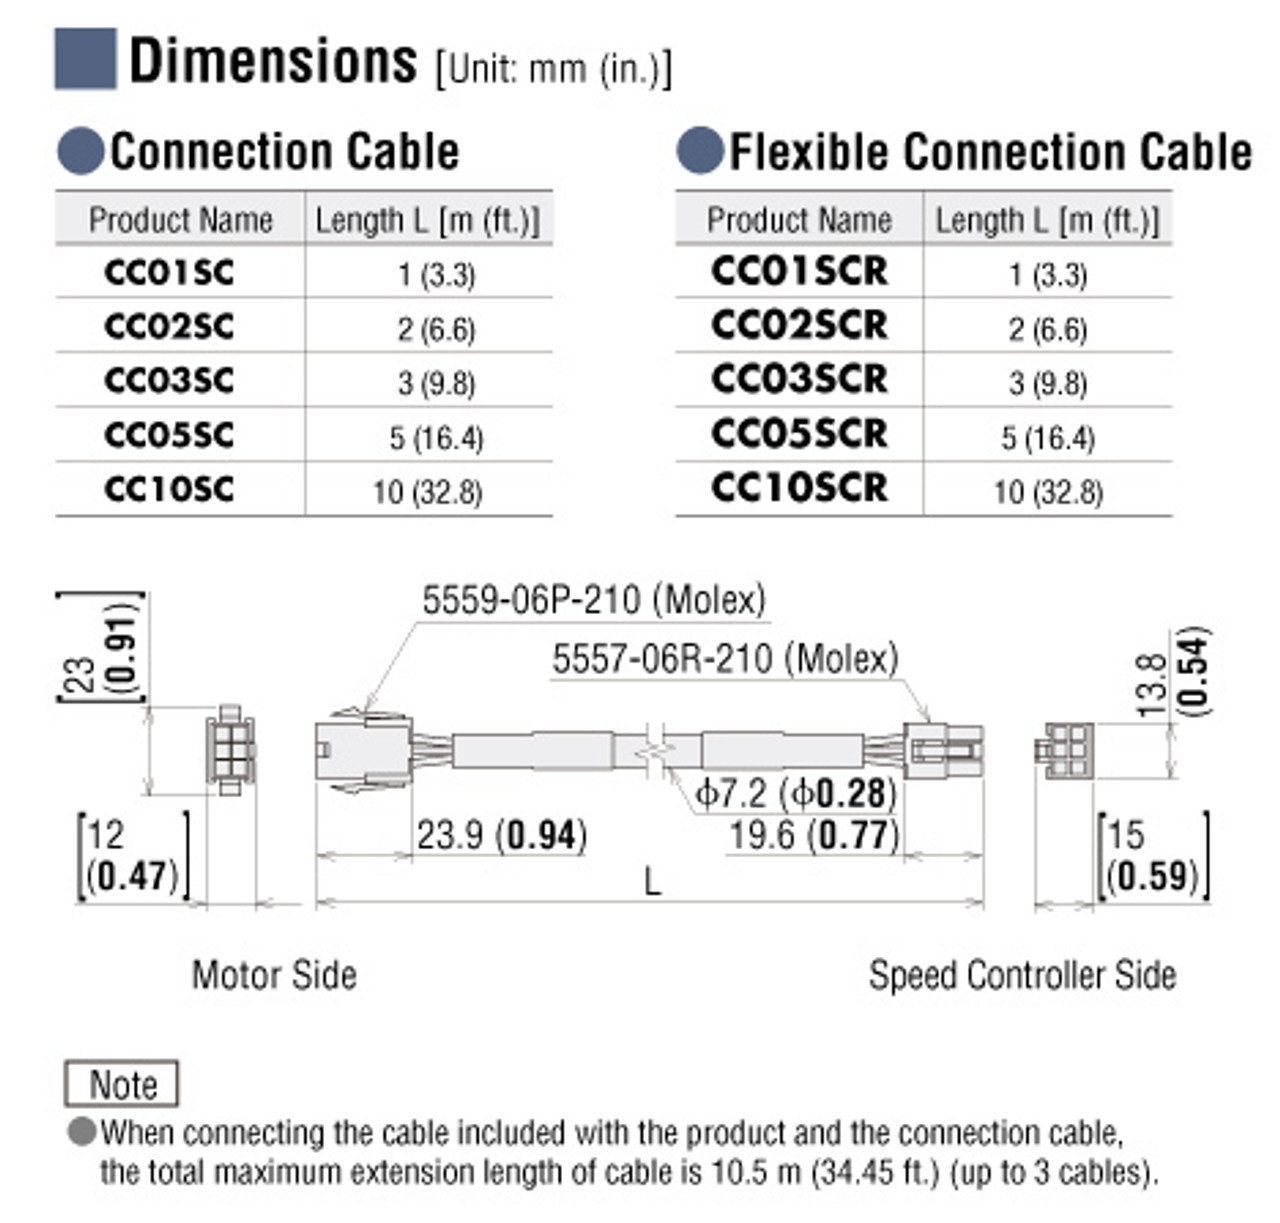 CC02SC - Dimensions